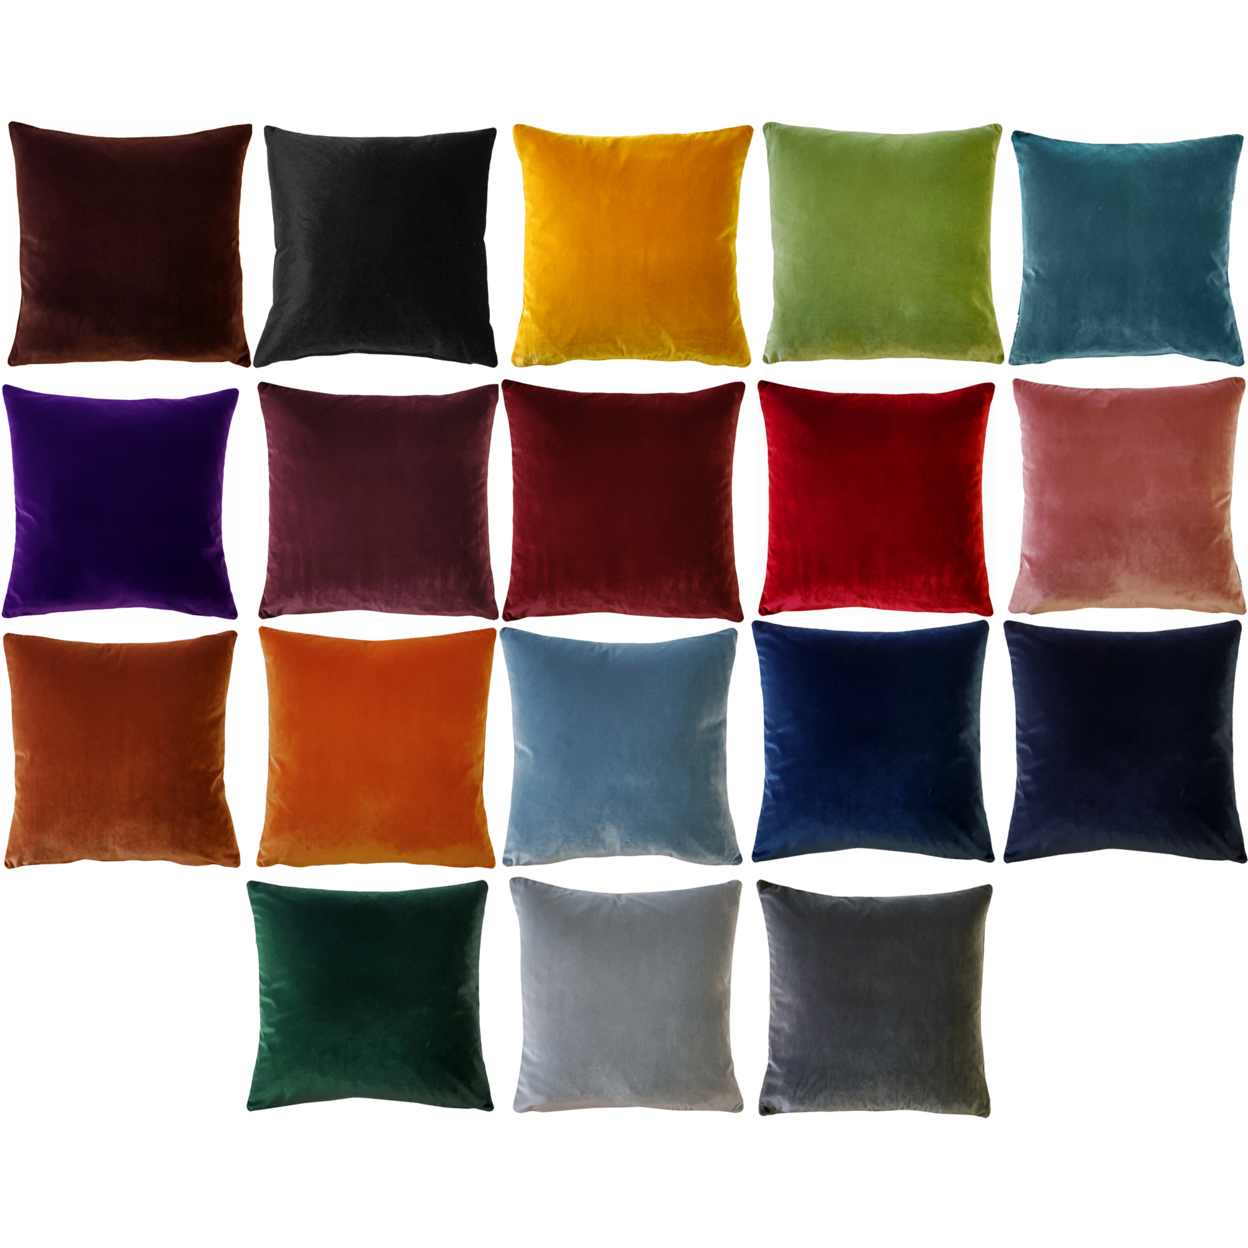 Castello Velvet Throw Pillows, Complete Pillow With Polyfill Pillow Insert (18 Colors, 3 Sizes) - Sedona Orange, 12x20